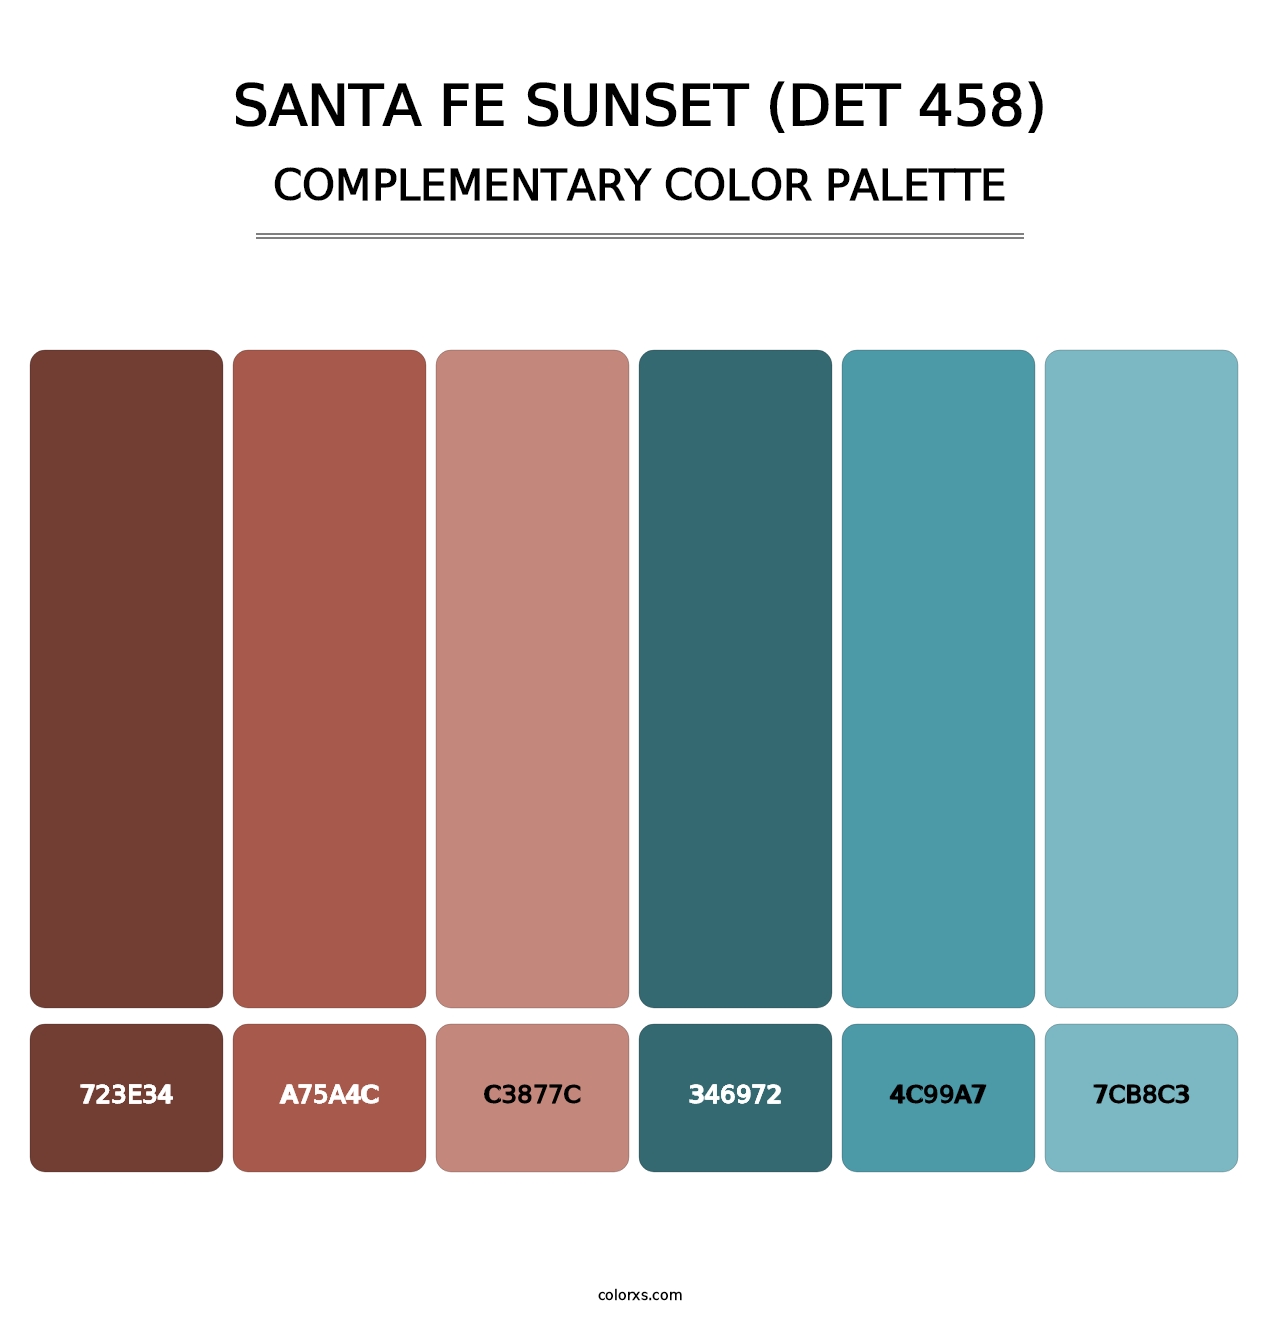 Santa Fe Sunset (DET 458) - Complementary Color Palette